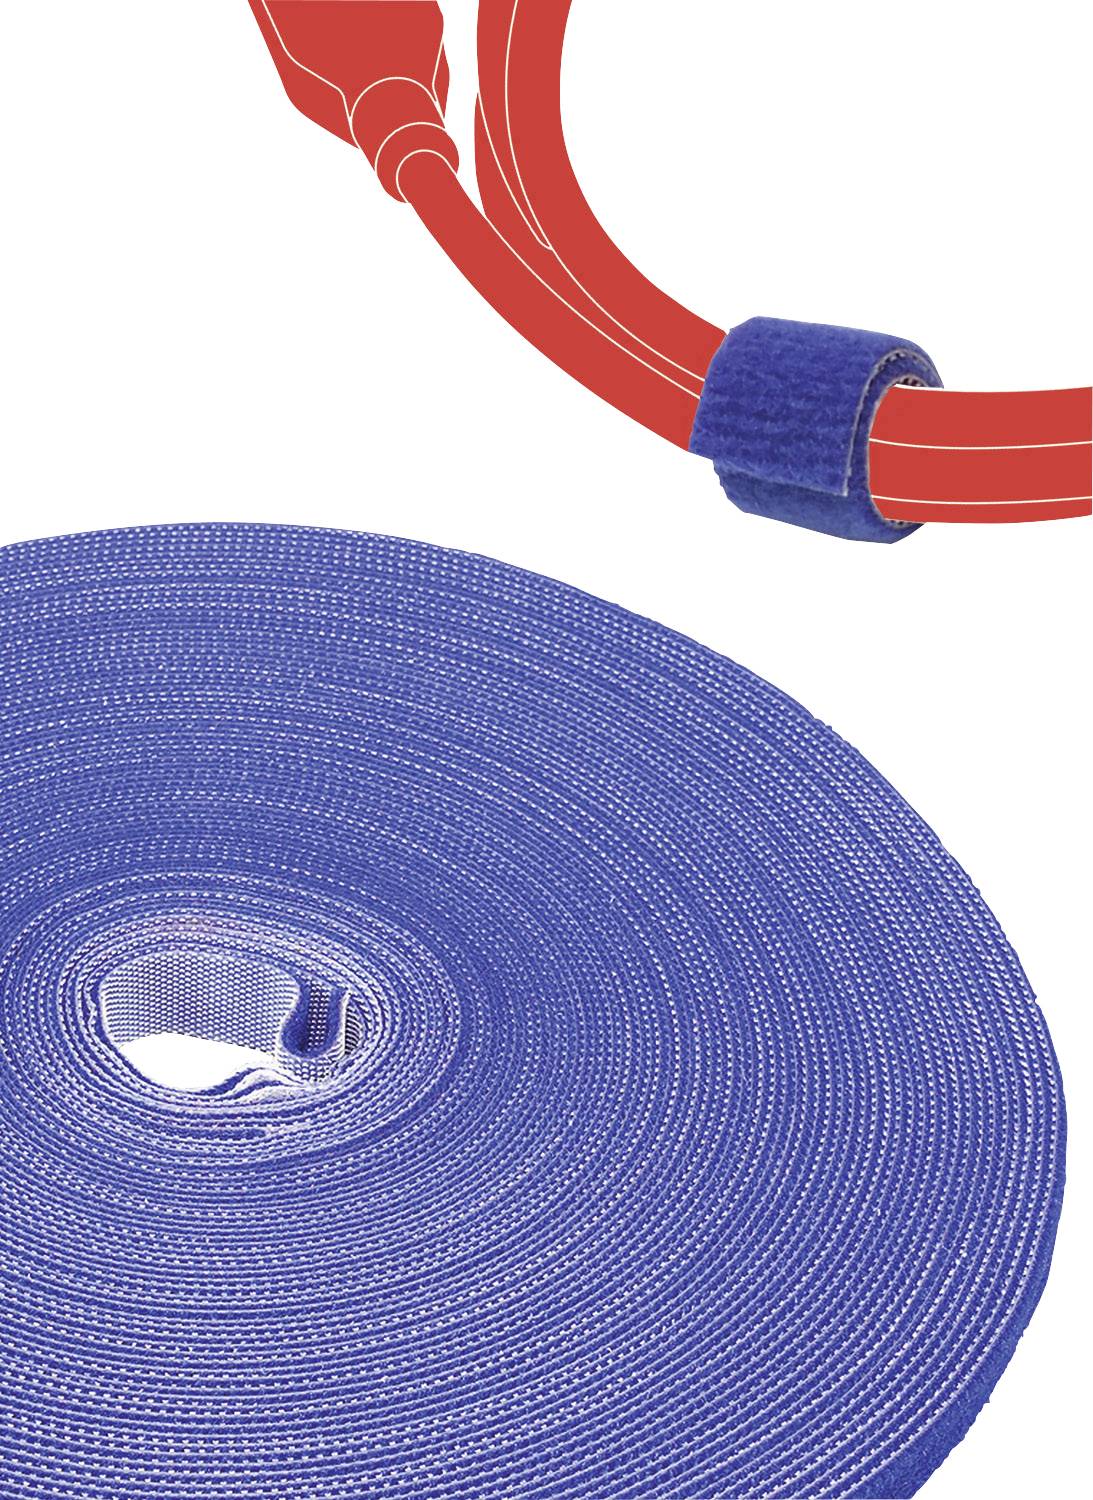 LABEL-THE-CABLE Roll, LTC PRO 1250, doppelseitige Klettbandrolle, 25 Meter blau